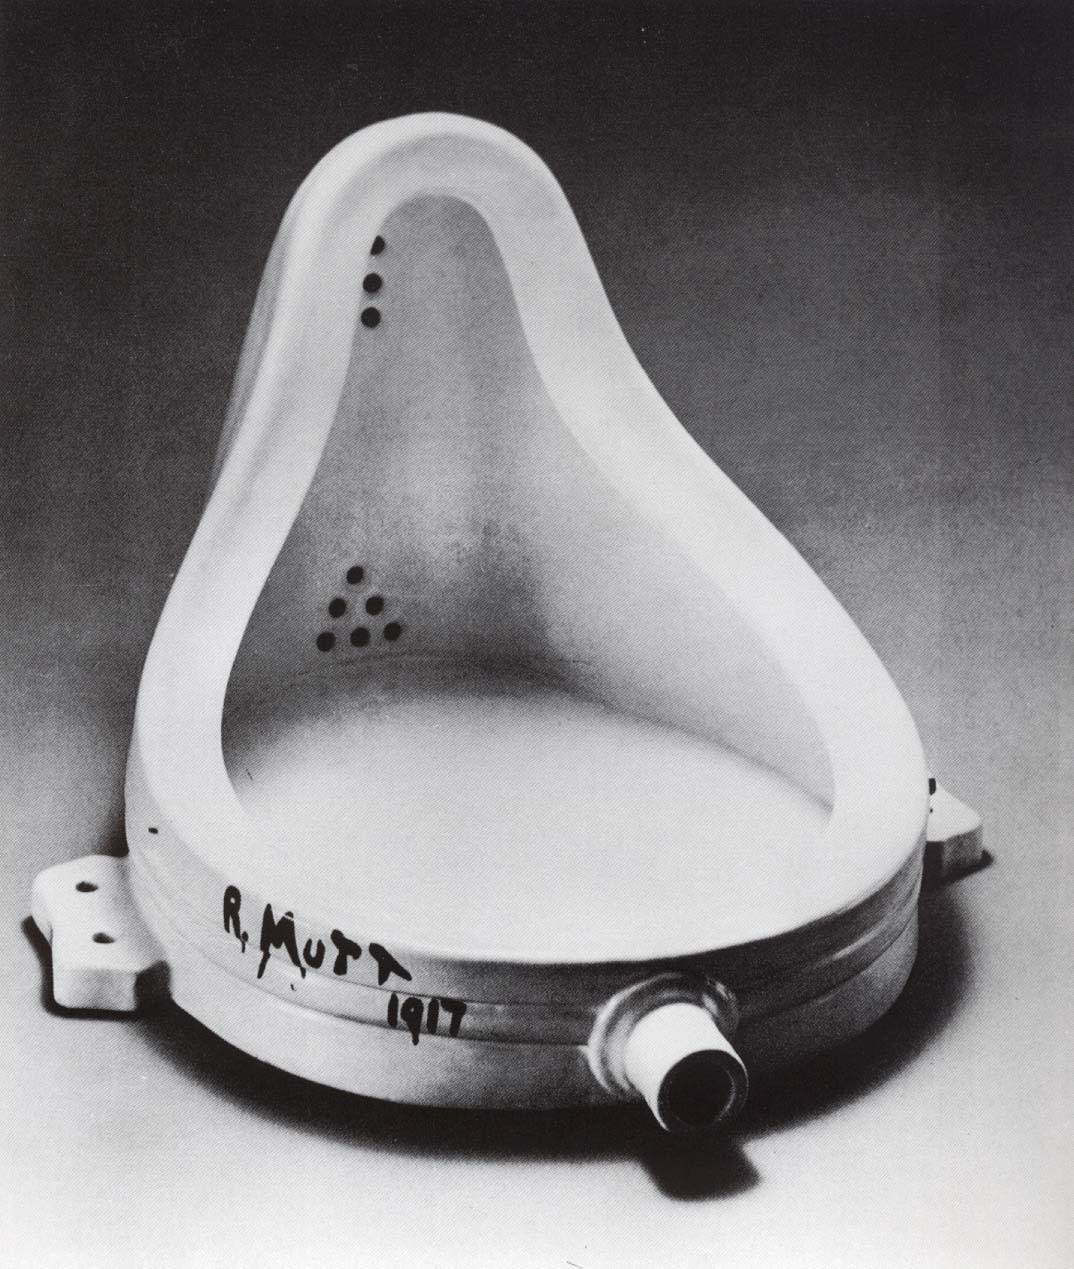 Who was Marcel Duchamp